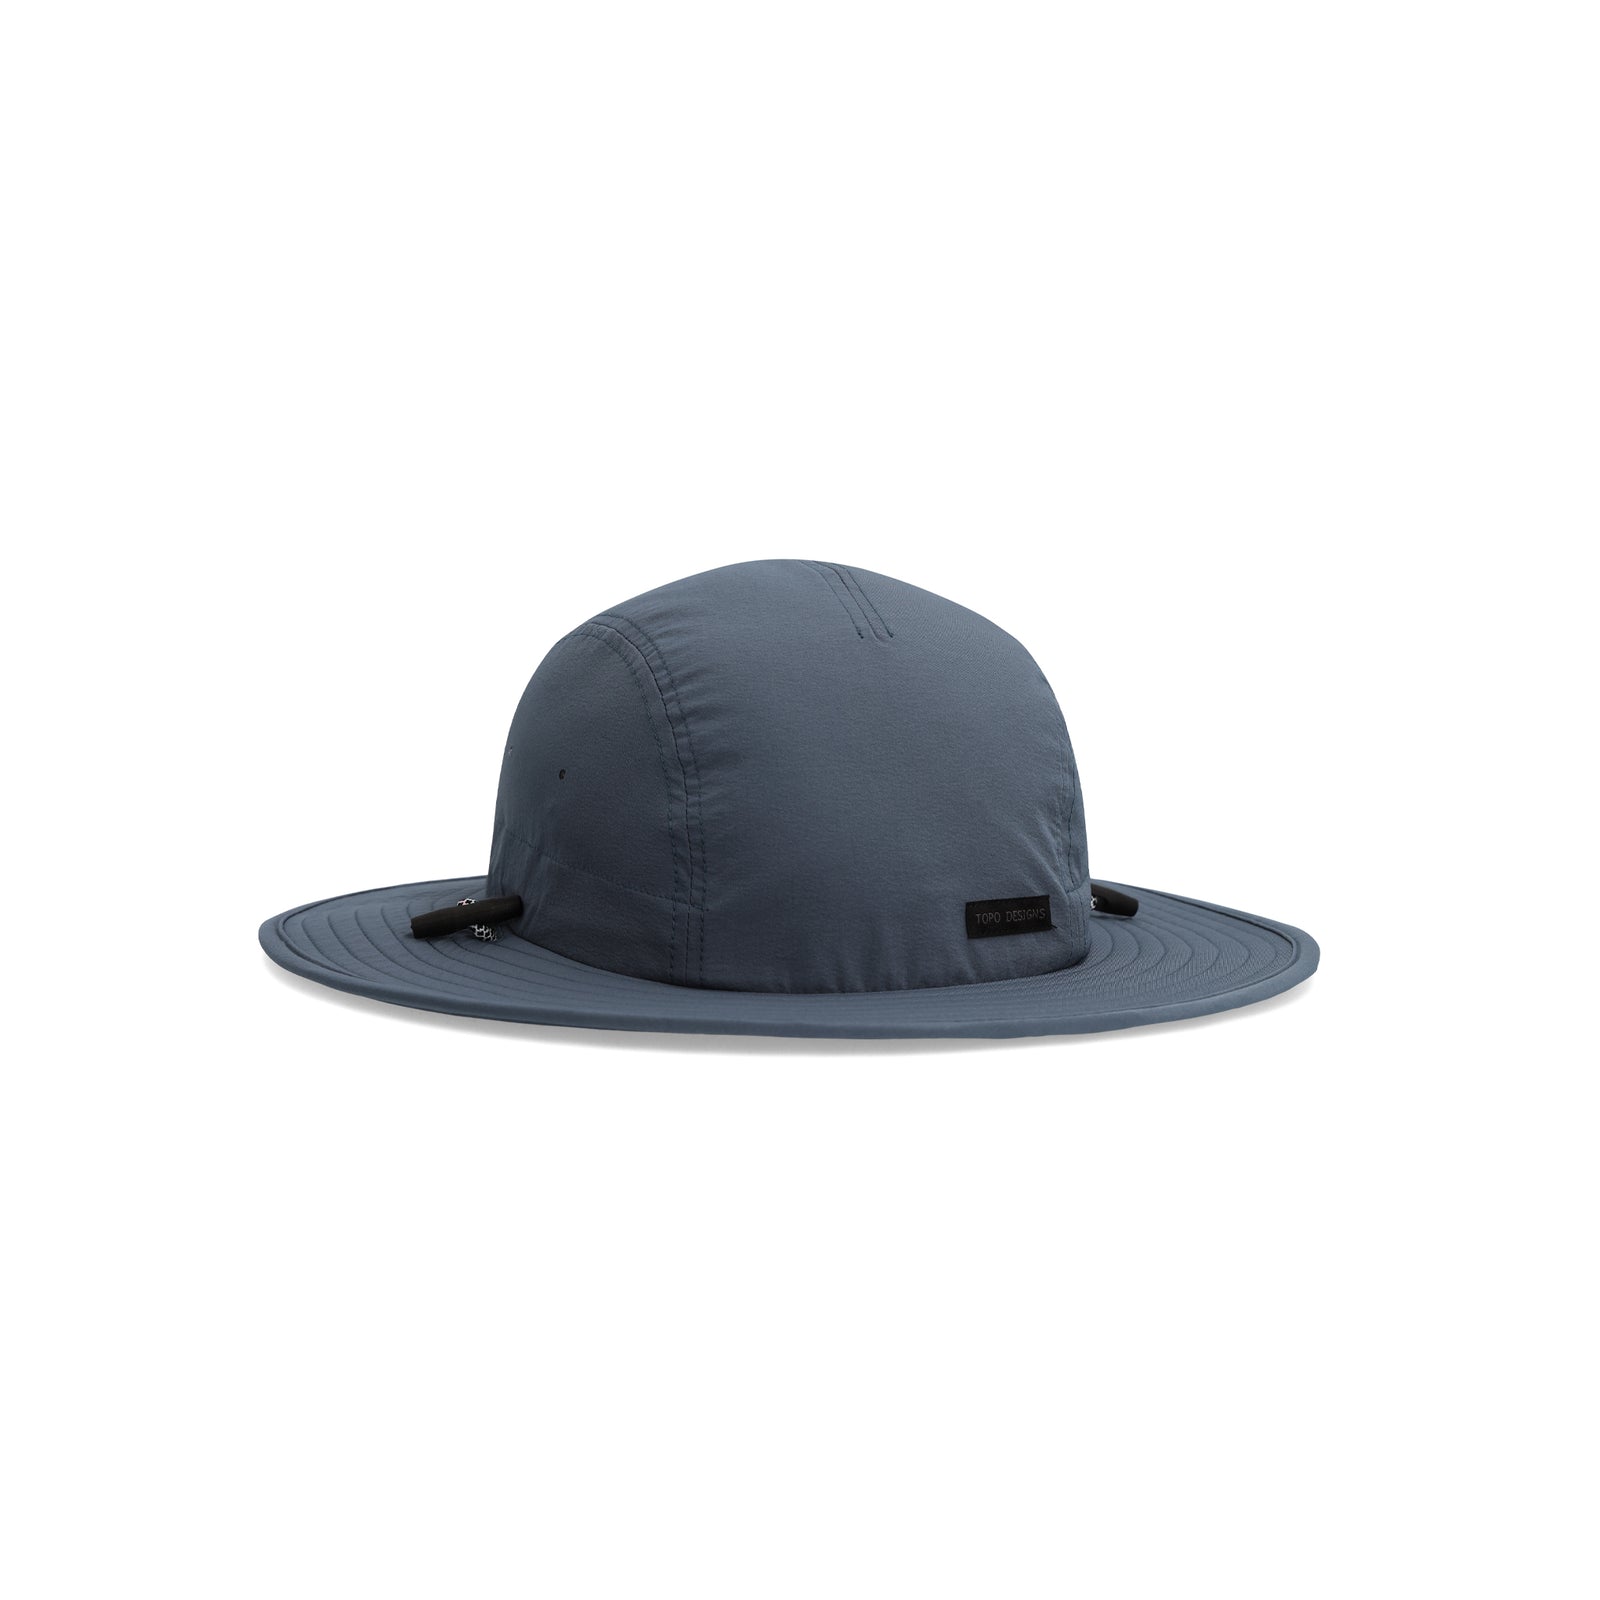 Topo Designs Sun Hat with original logo patch in "Stone Blue".